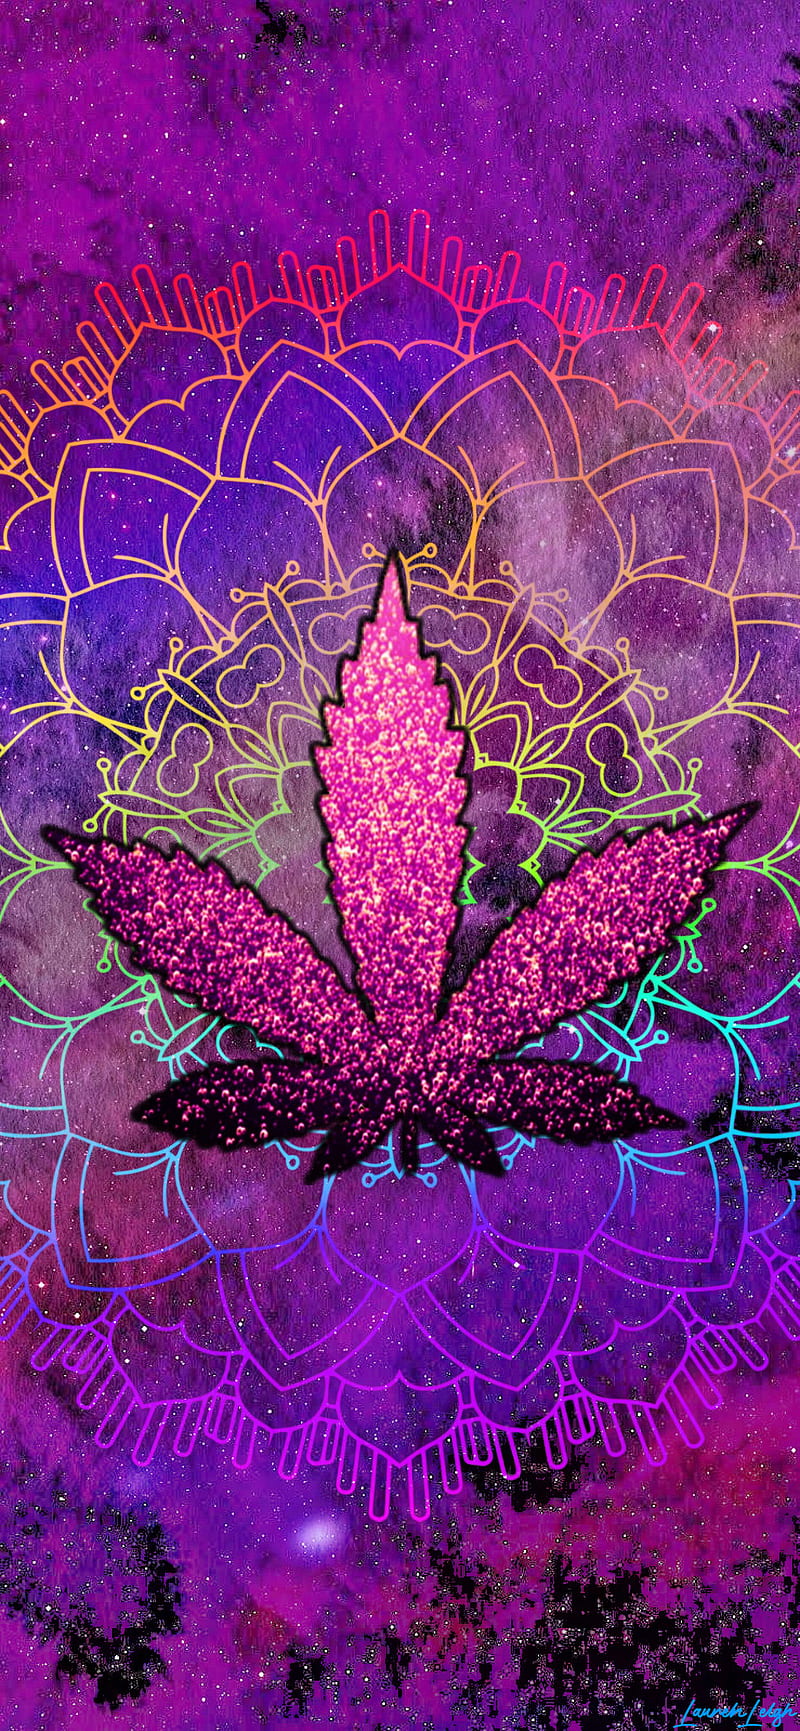 A neon purple glittery cannabis leaf on a galaxy background. - Weed